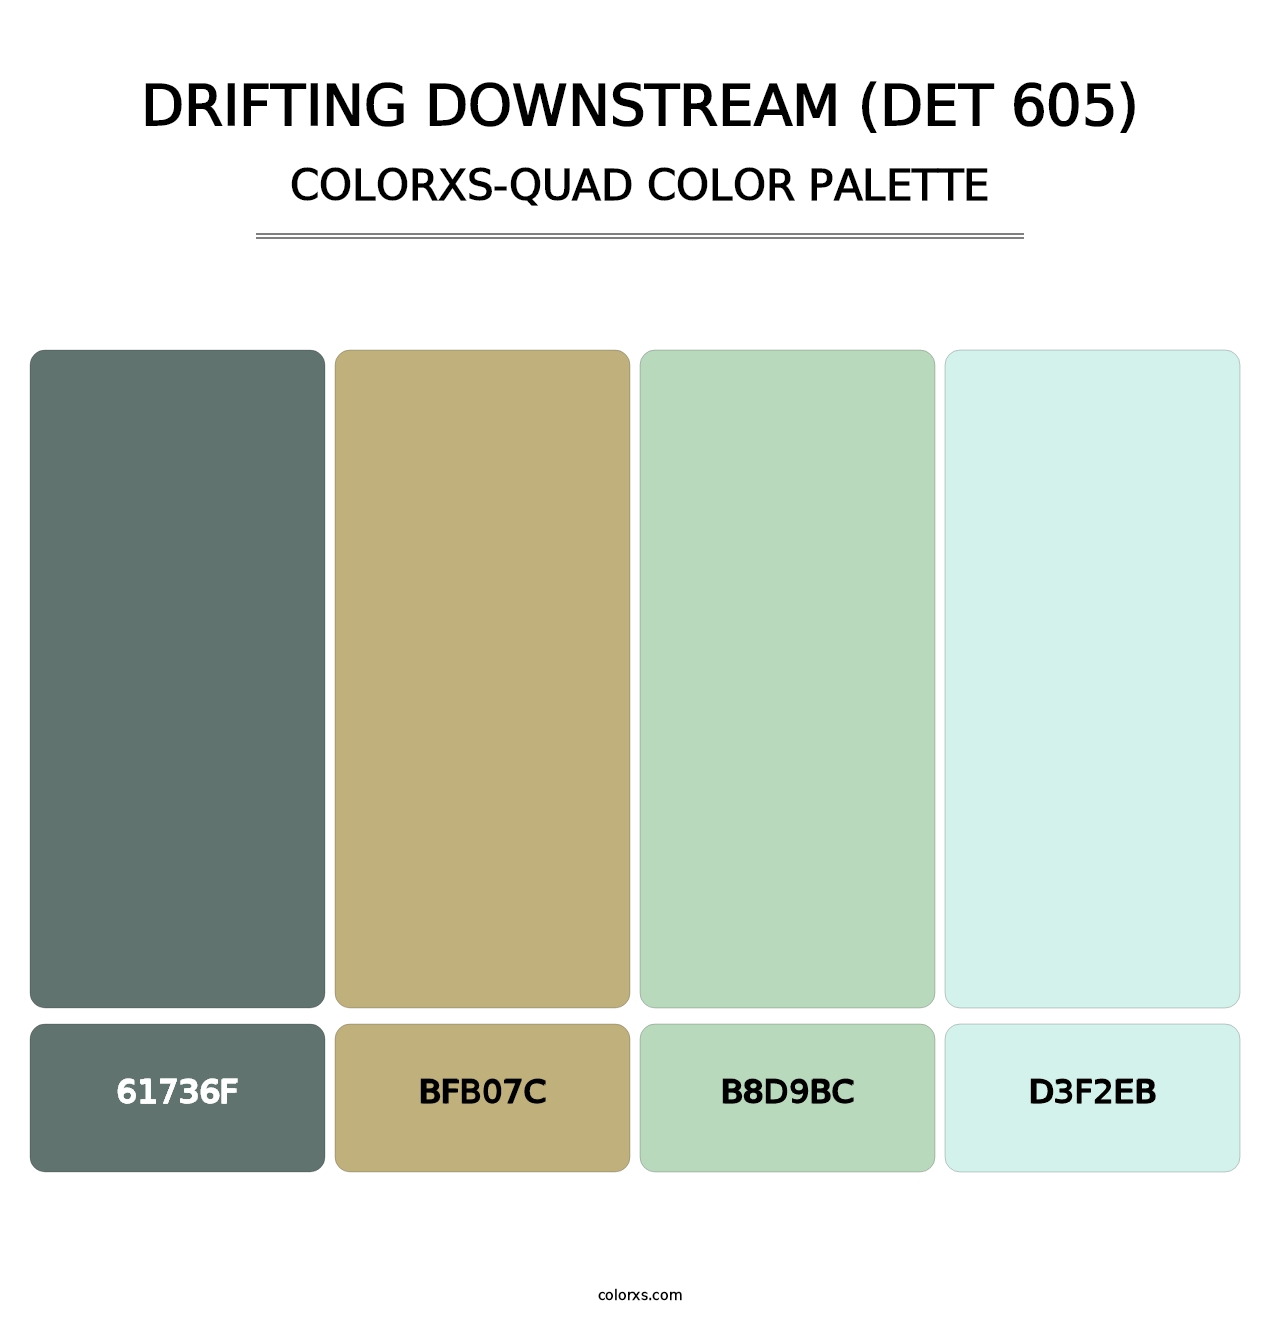 Drifting Downstream (DET 605) - Colorxs Quad Palette